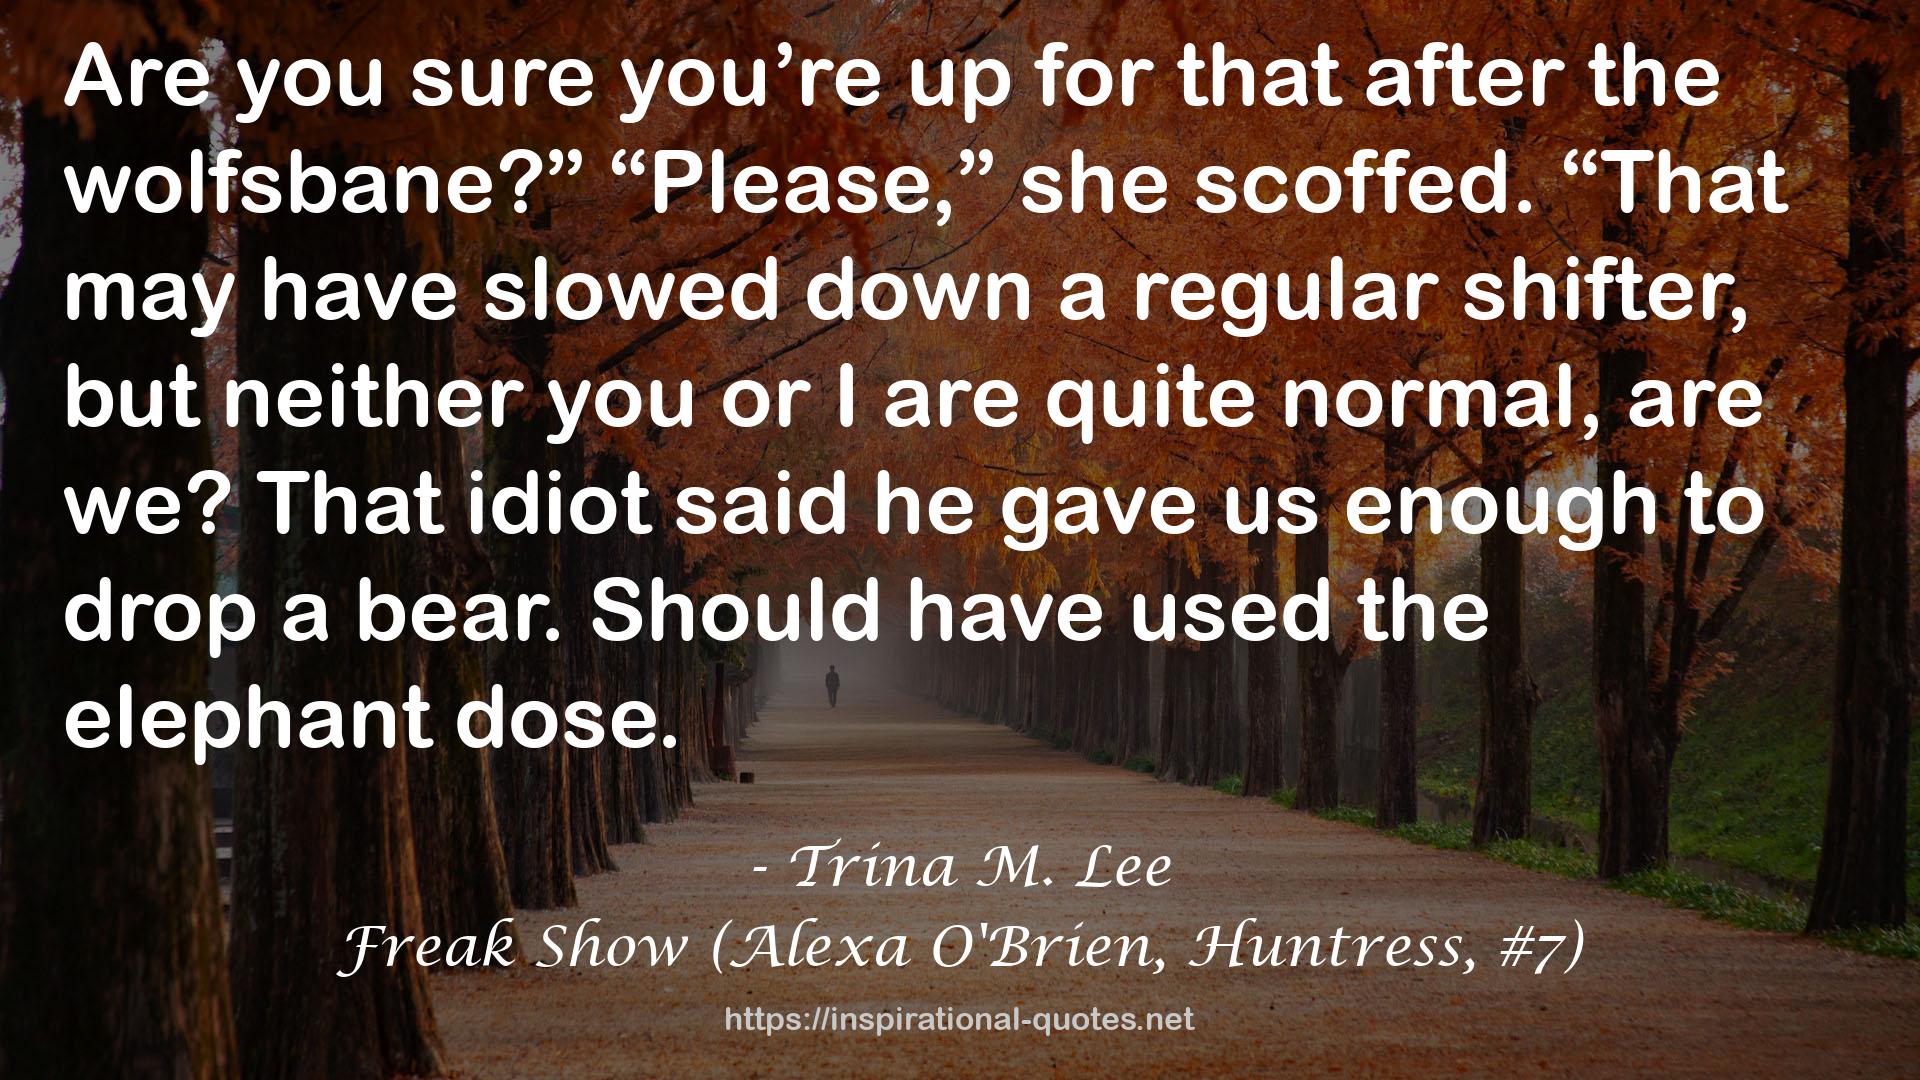 Freak Show (Alexa O'Brien, Huntress, #7) QUOTES